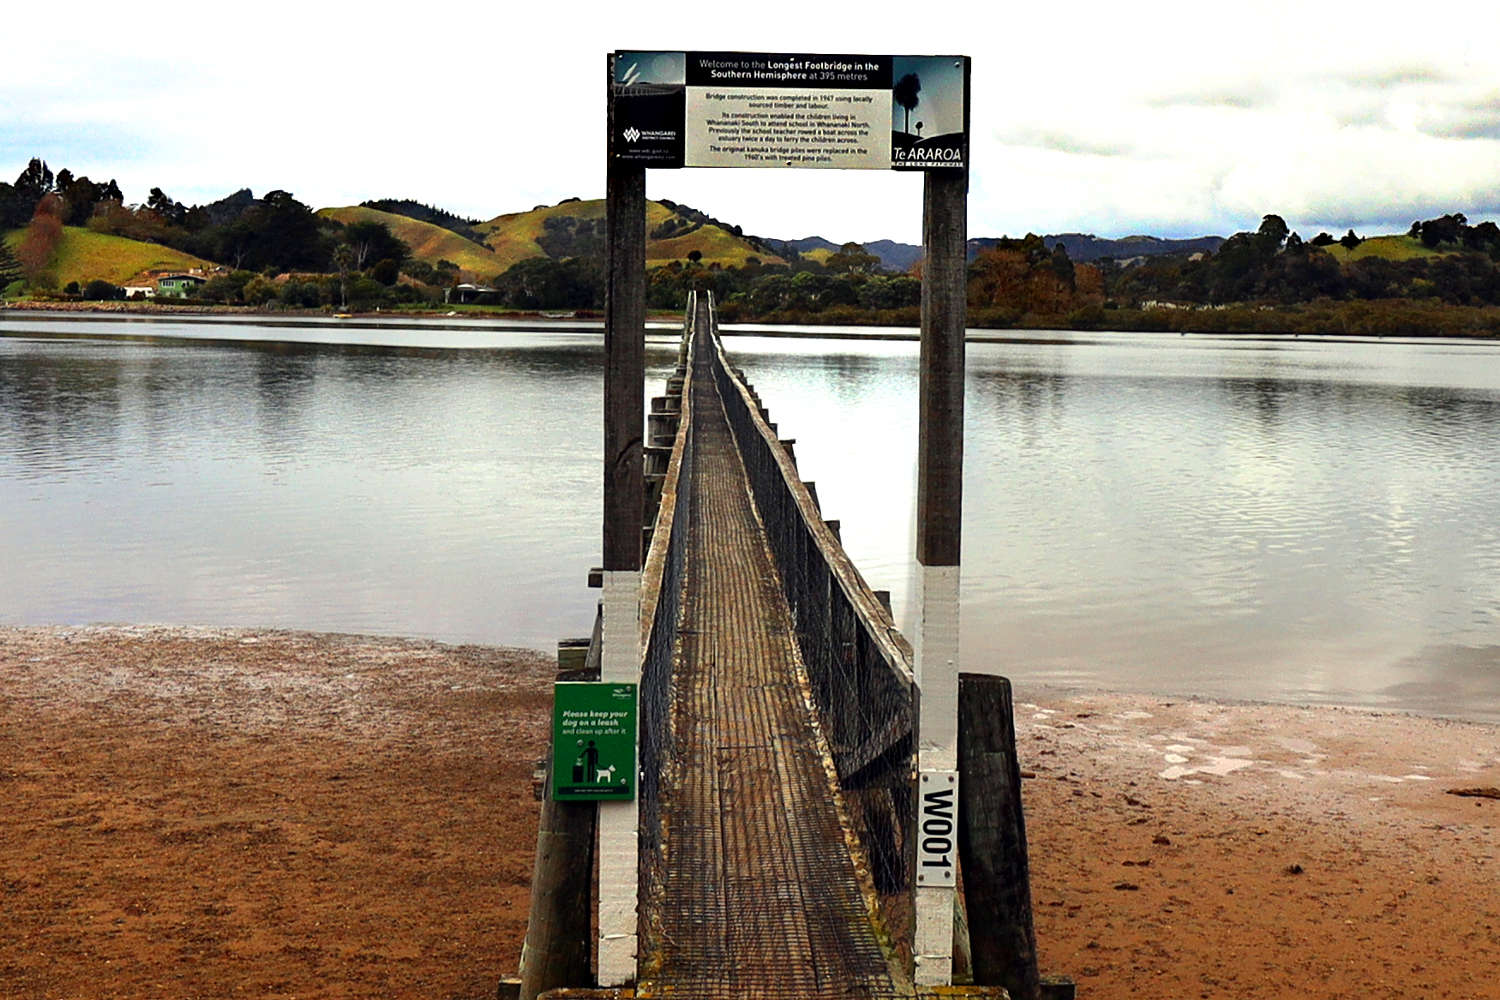 Whananaki North footbridge 375m in length